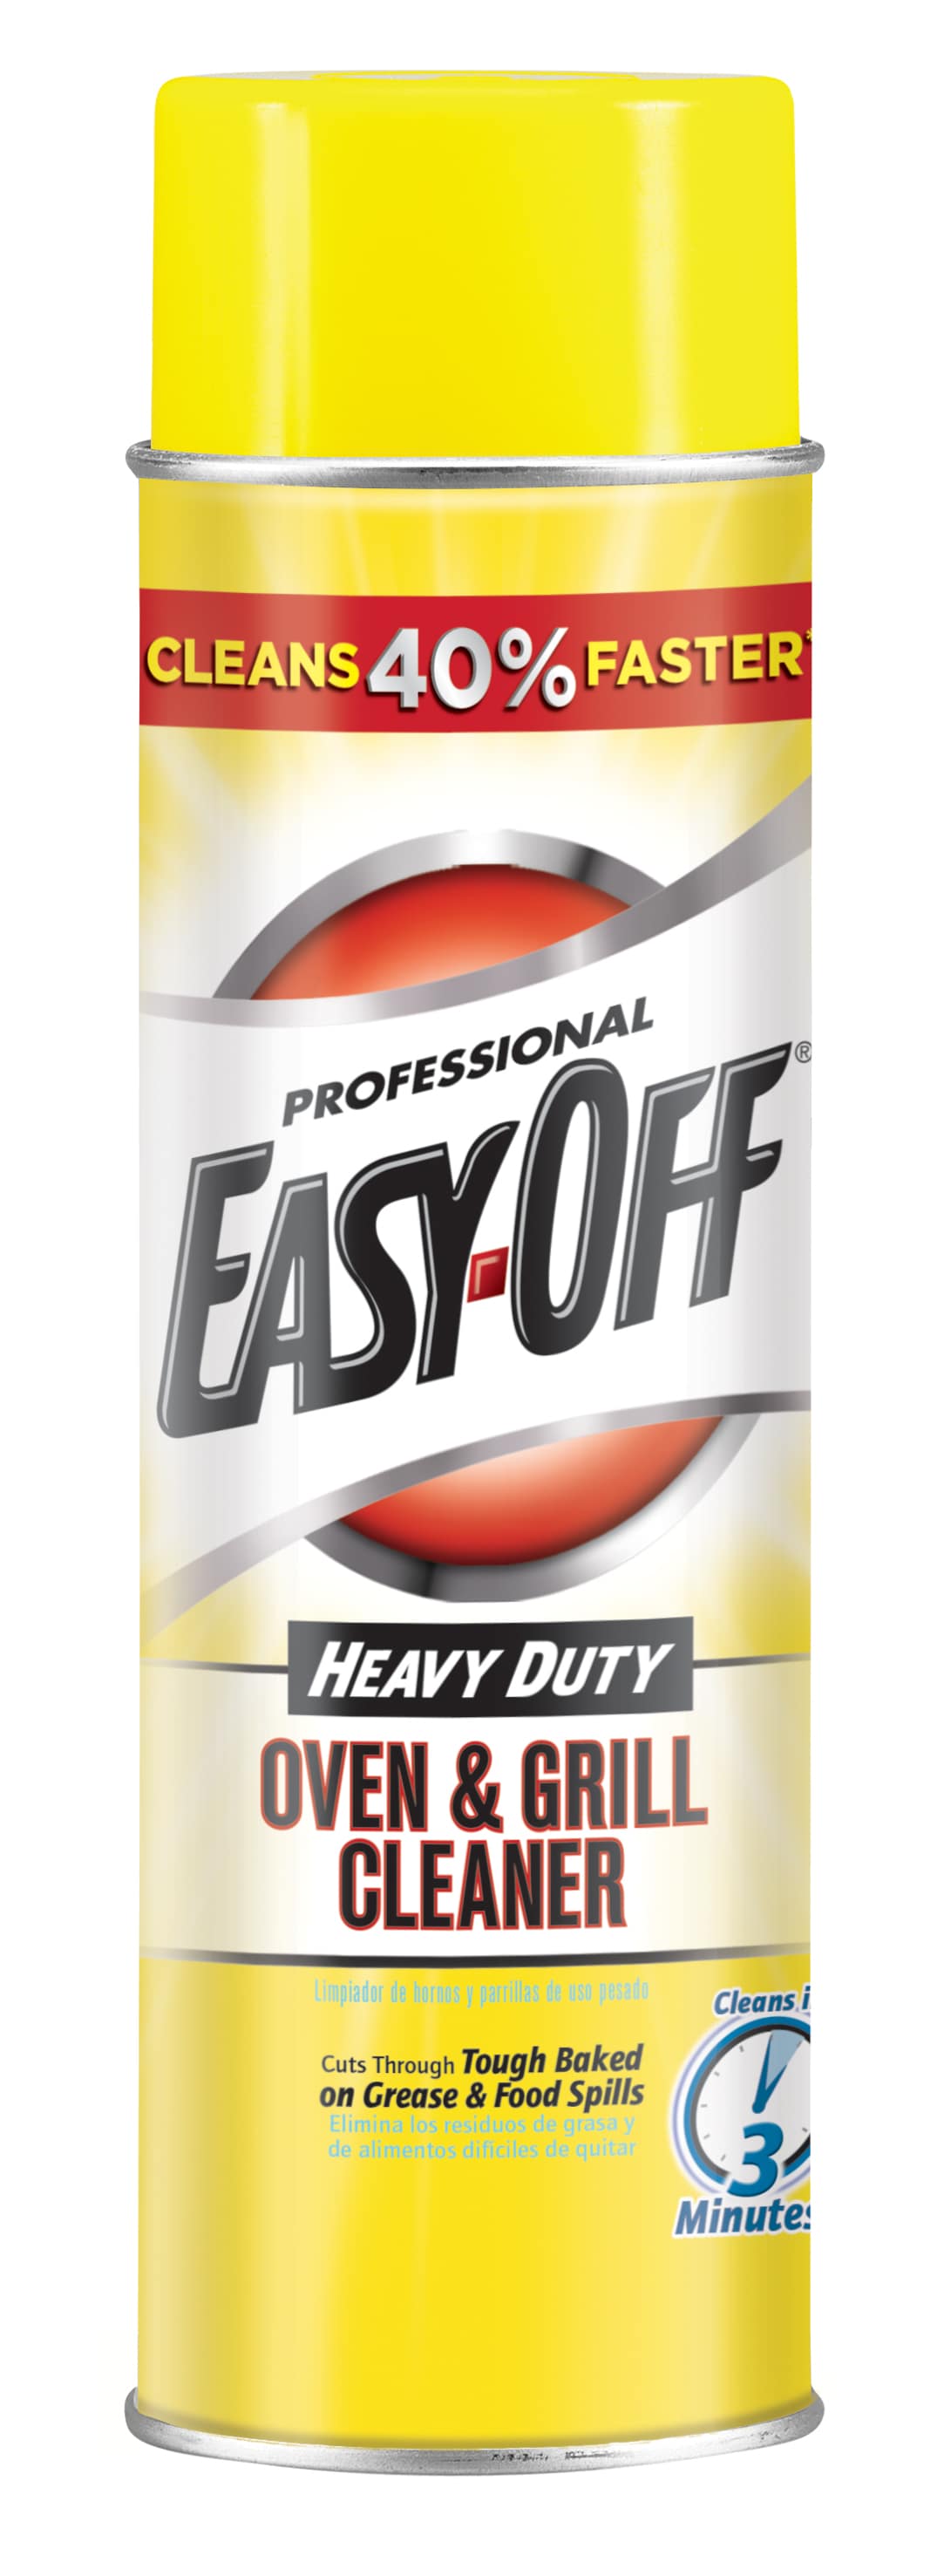 Easy-Off Degreaser, Cleaner, Heavy Duty - 32 fl oz